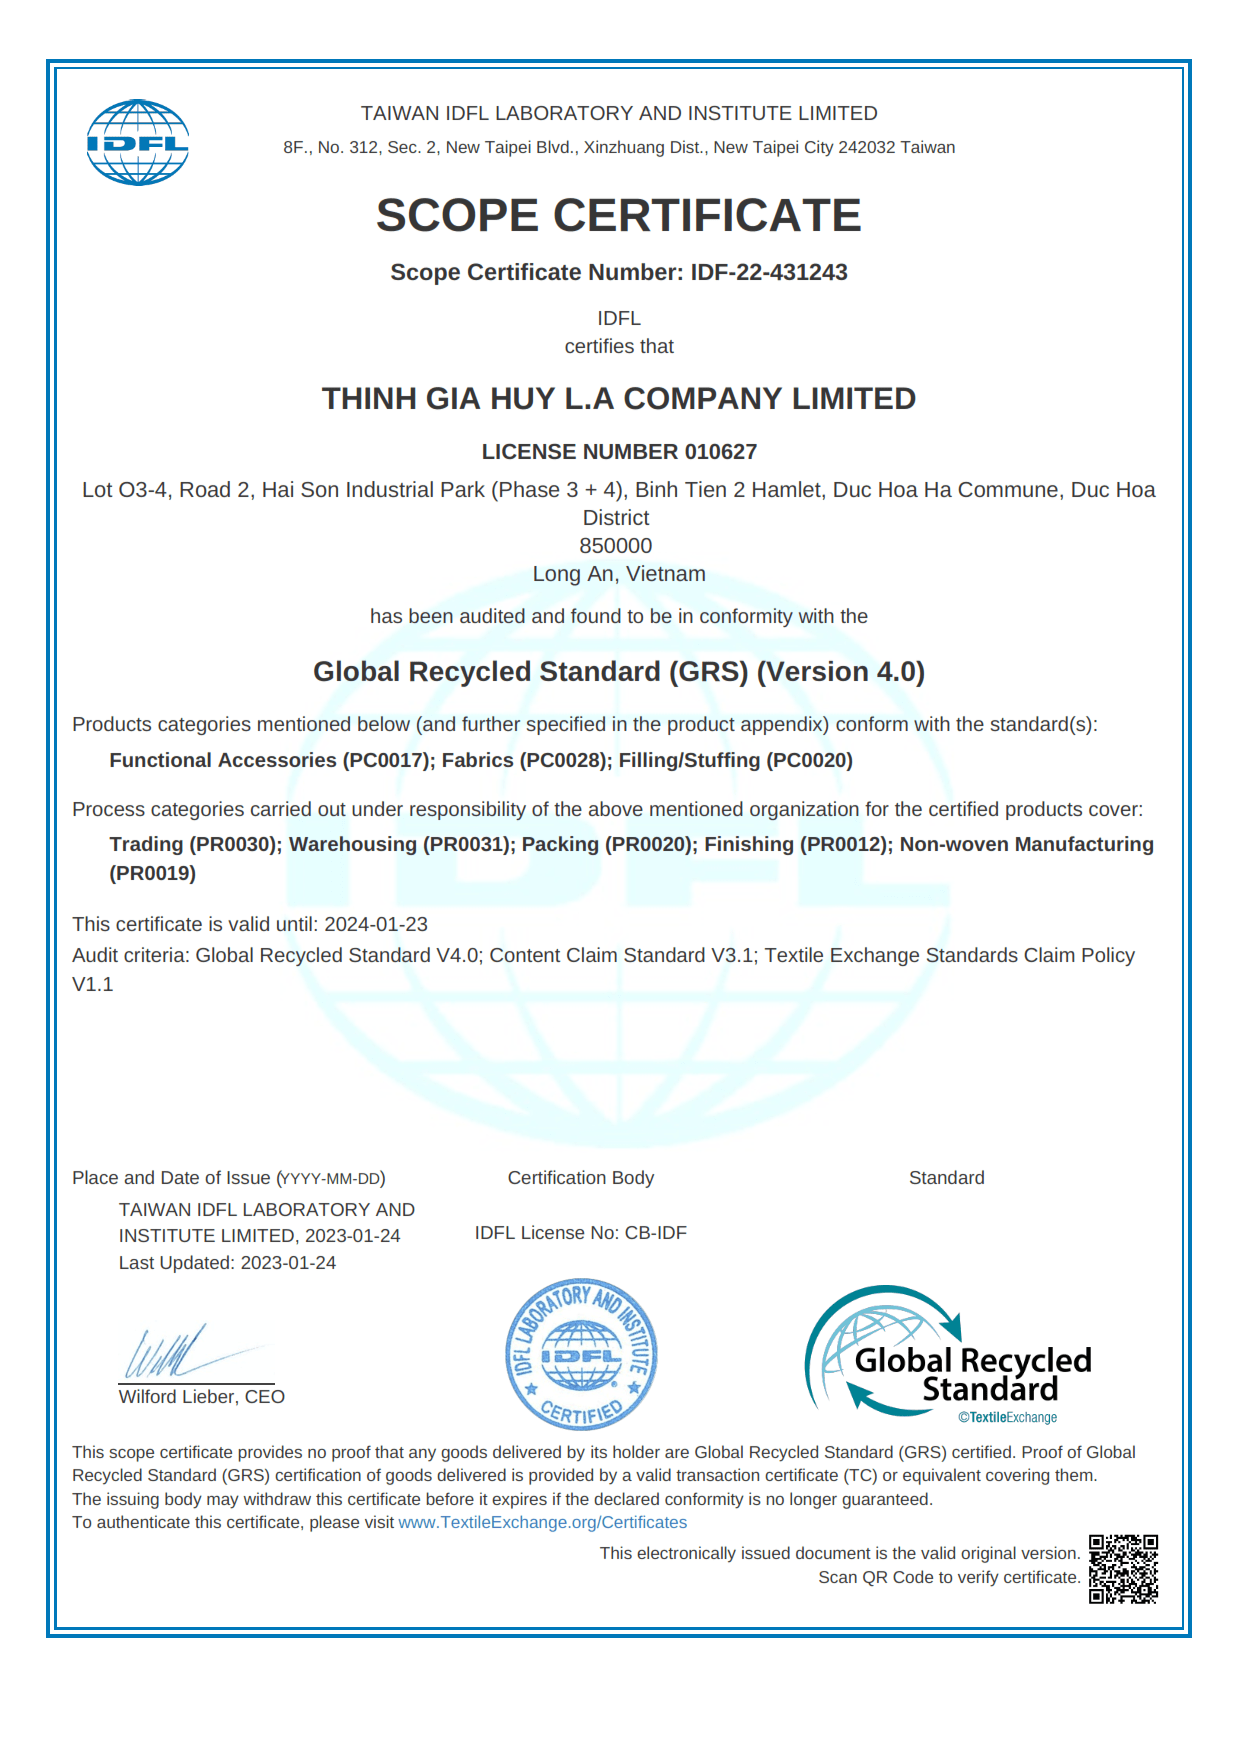 IDFL 22-431243 GRS Certificate - thinh-gia-huy-la-company-limited (24 Jan 2023)_v3_001